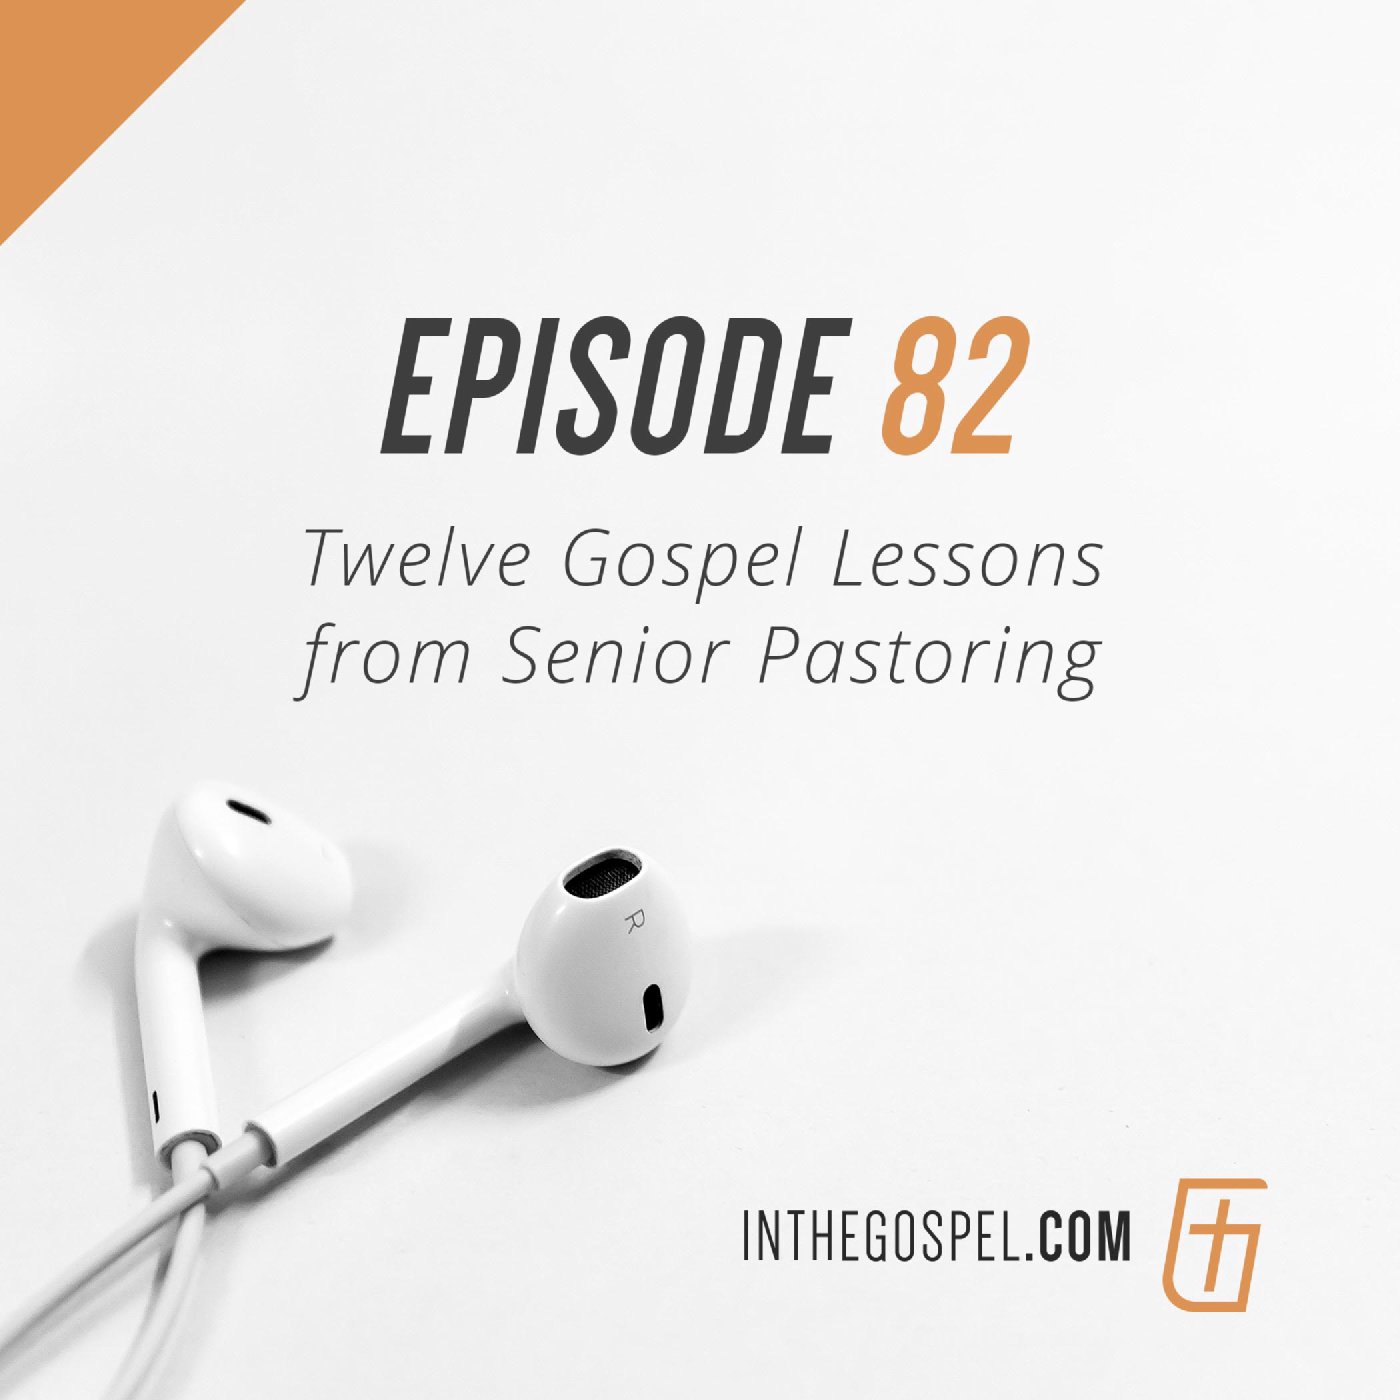 Episode 82: Twelve Gospel Lessons from Senior Pastoring (Part 2)